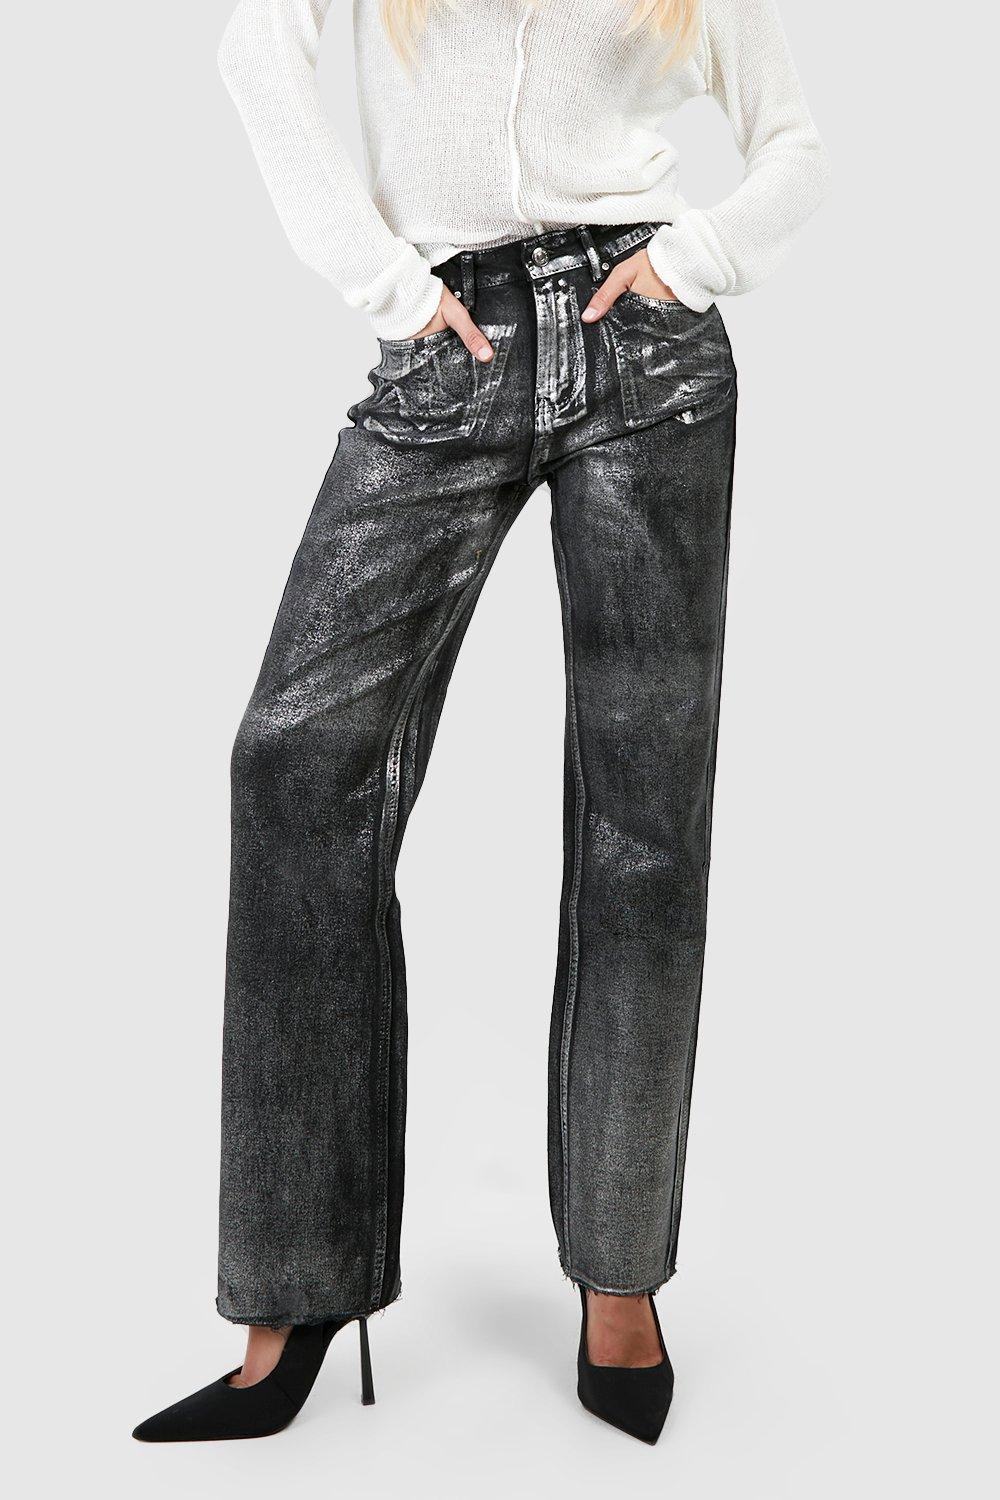 Black Metallic Coated Jeans